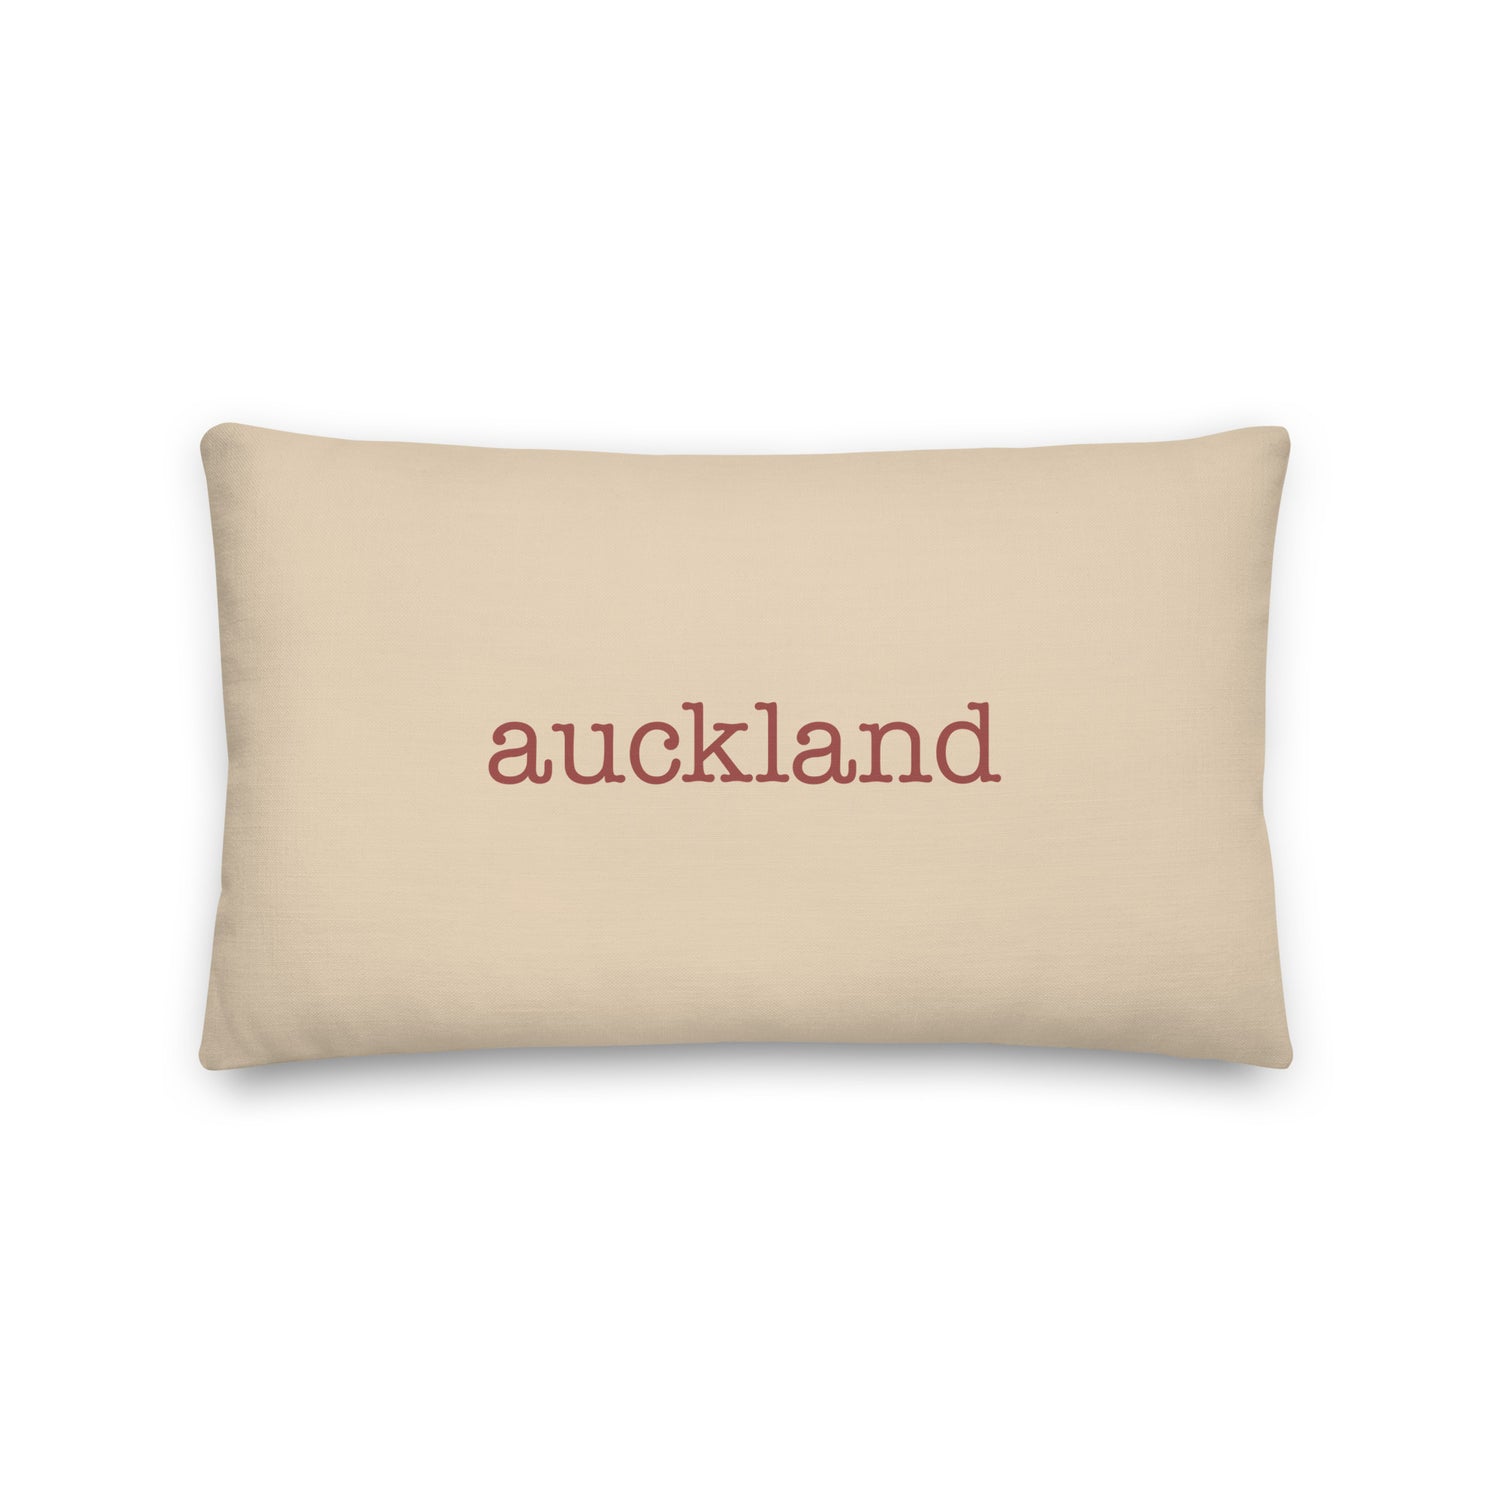 Auckland New Zealand Pillows and Blankets • AKL Airport Code